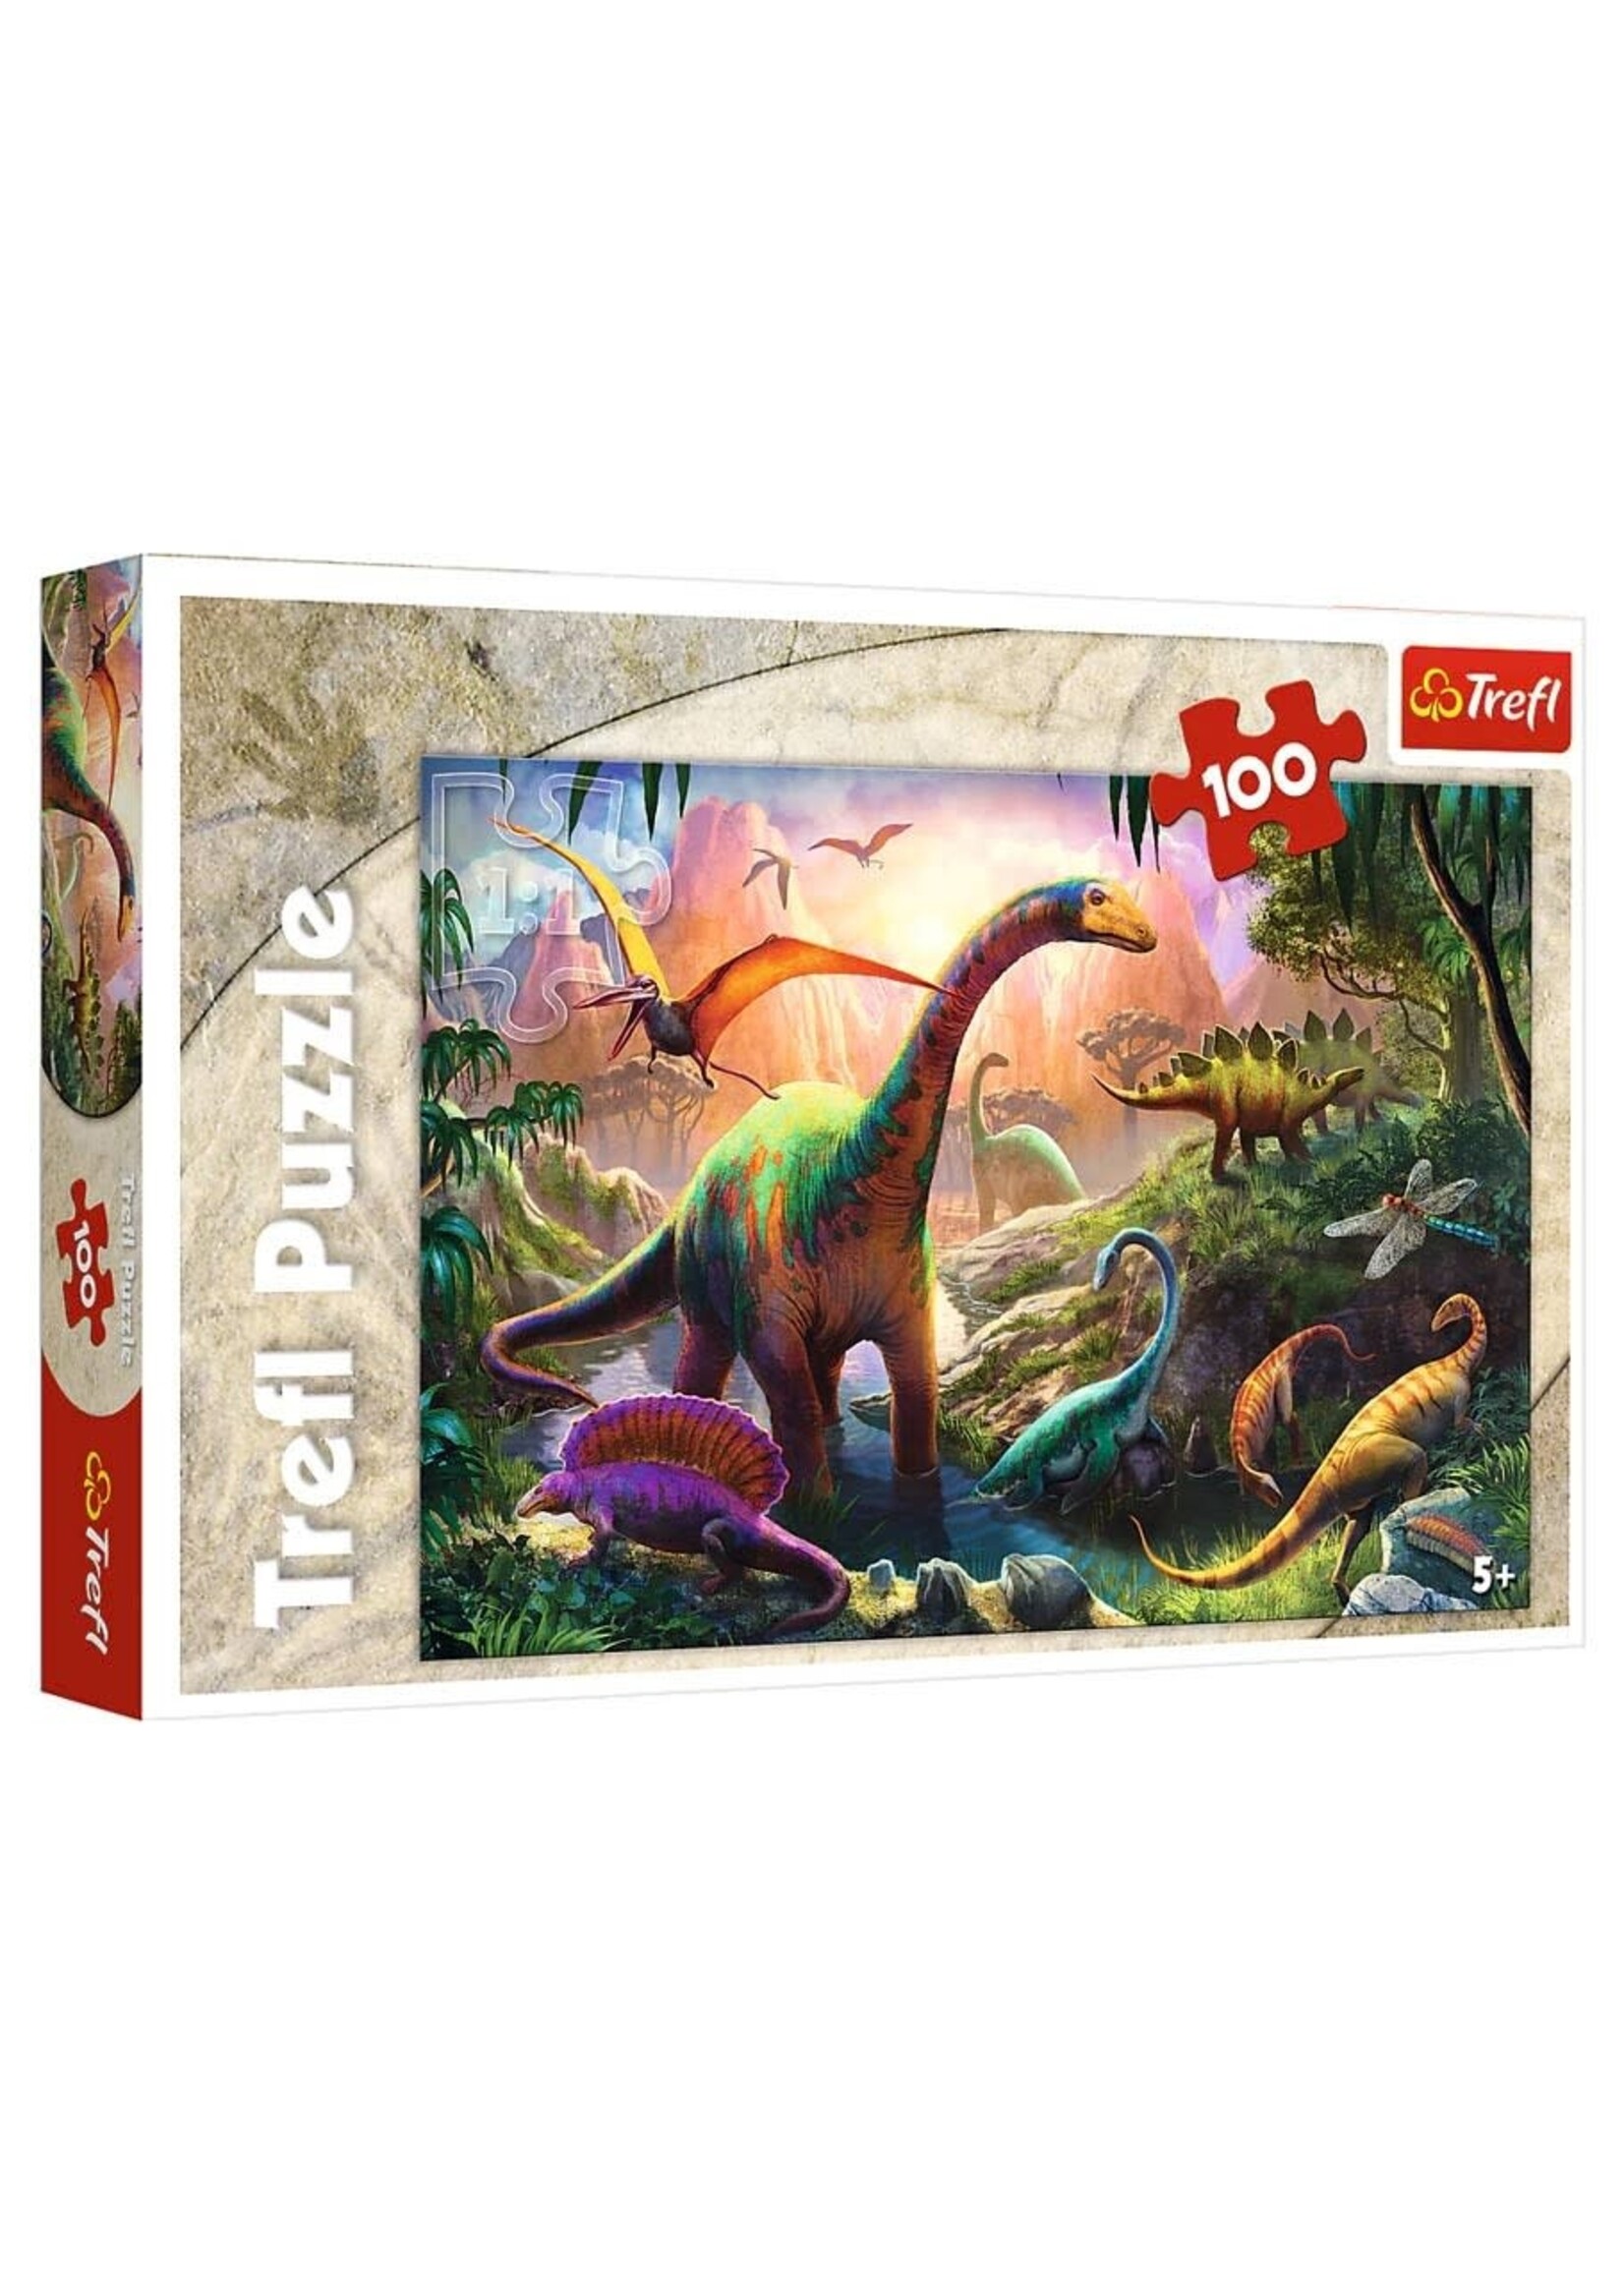 Trefl Puzzle: Dinosaurs' Land 100pc